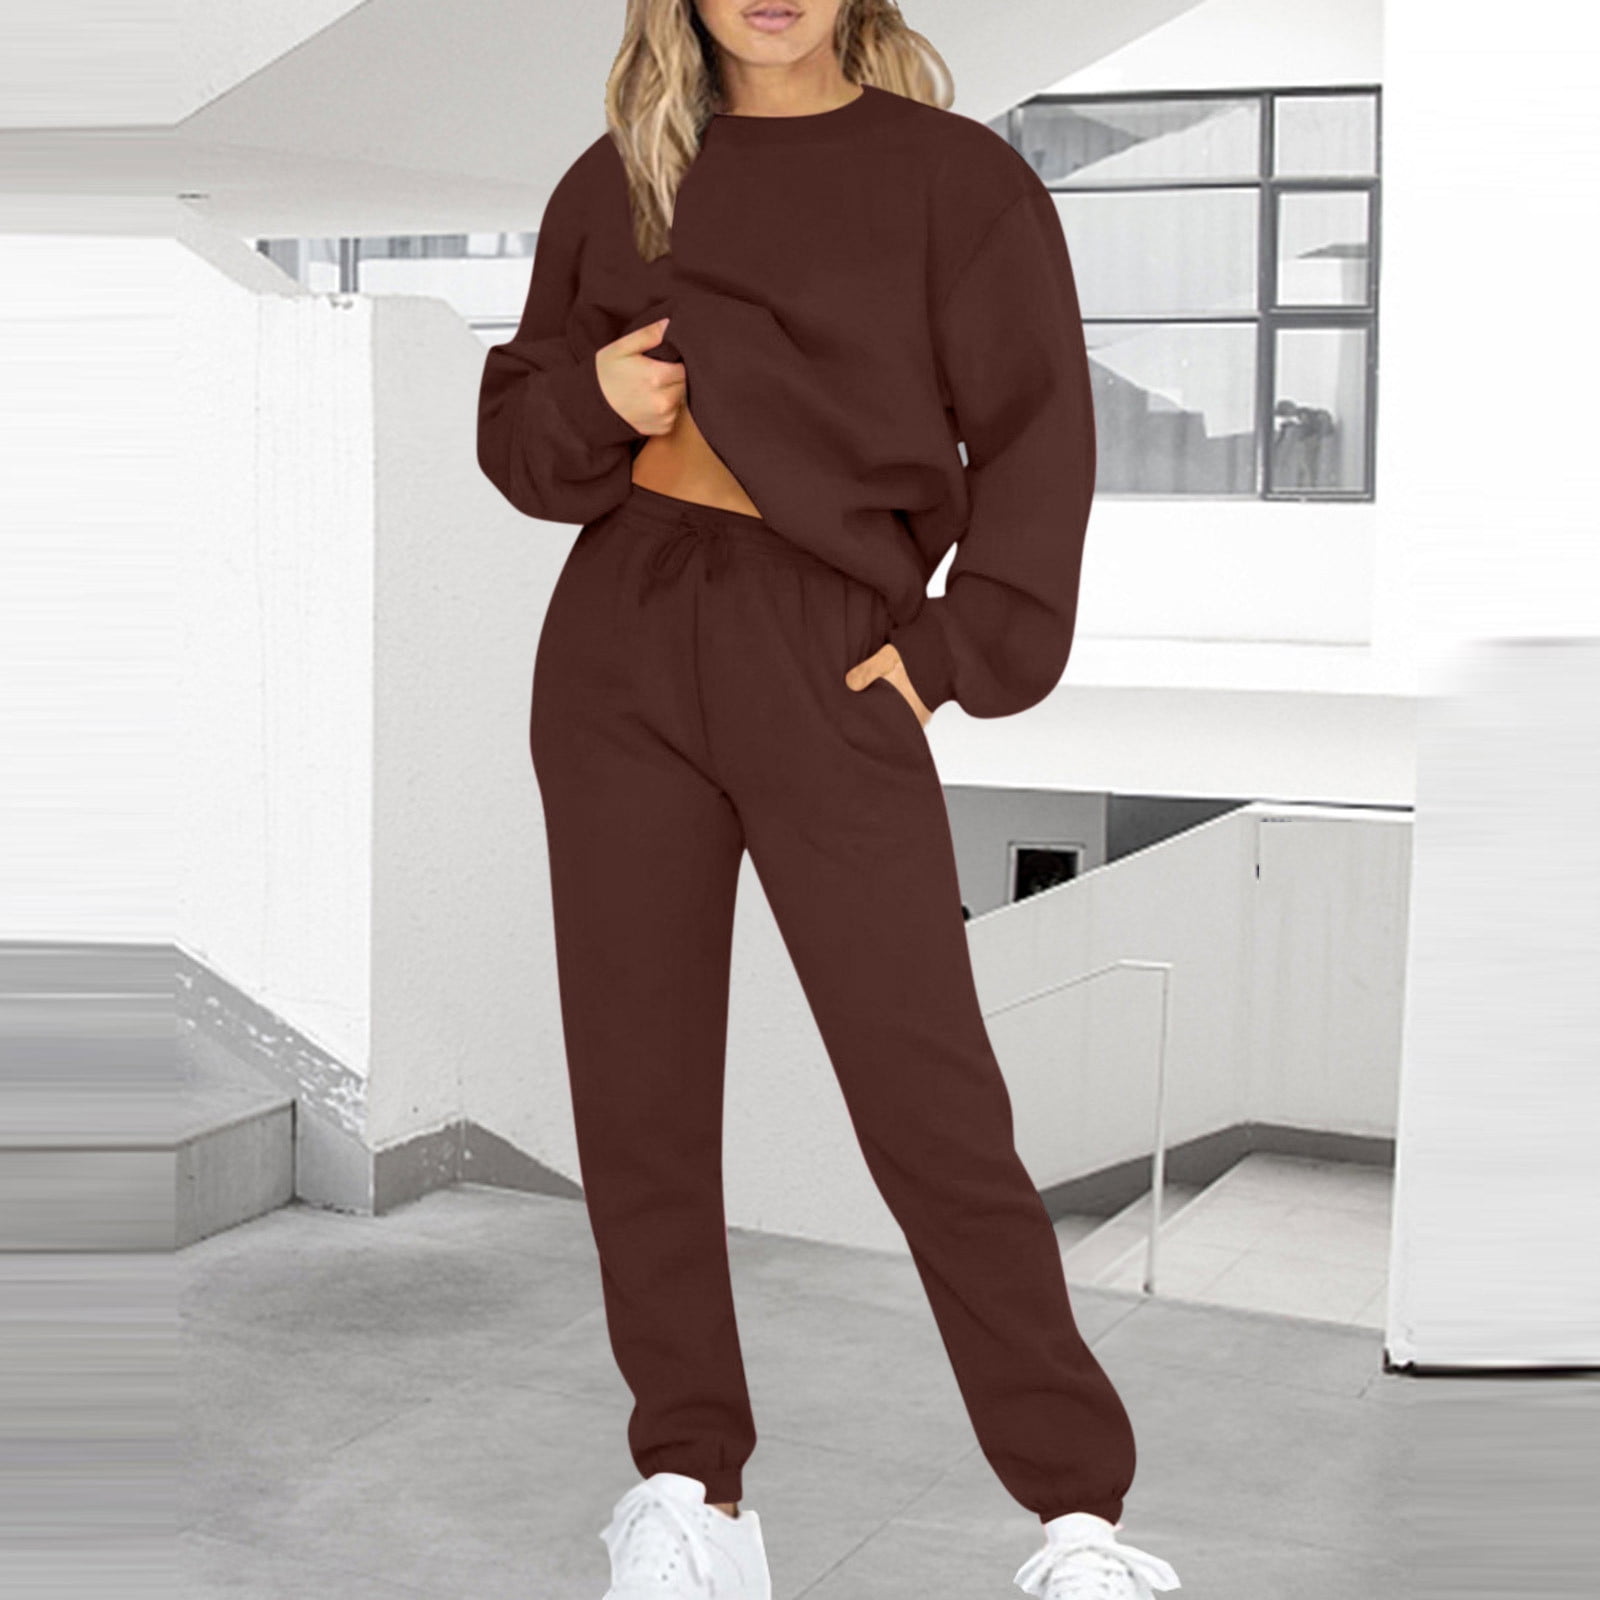 Hfyihgf Plus Size Women Pullover Hoodie Tracksuit Two Piece Sets Pockets  Sweatpants Sport Jogger Sweatsuit Solid Color Sportswear(Khaki,XXL) 